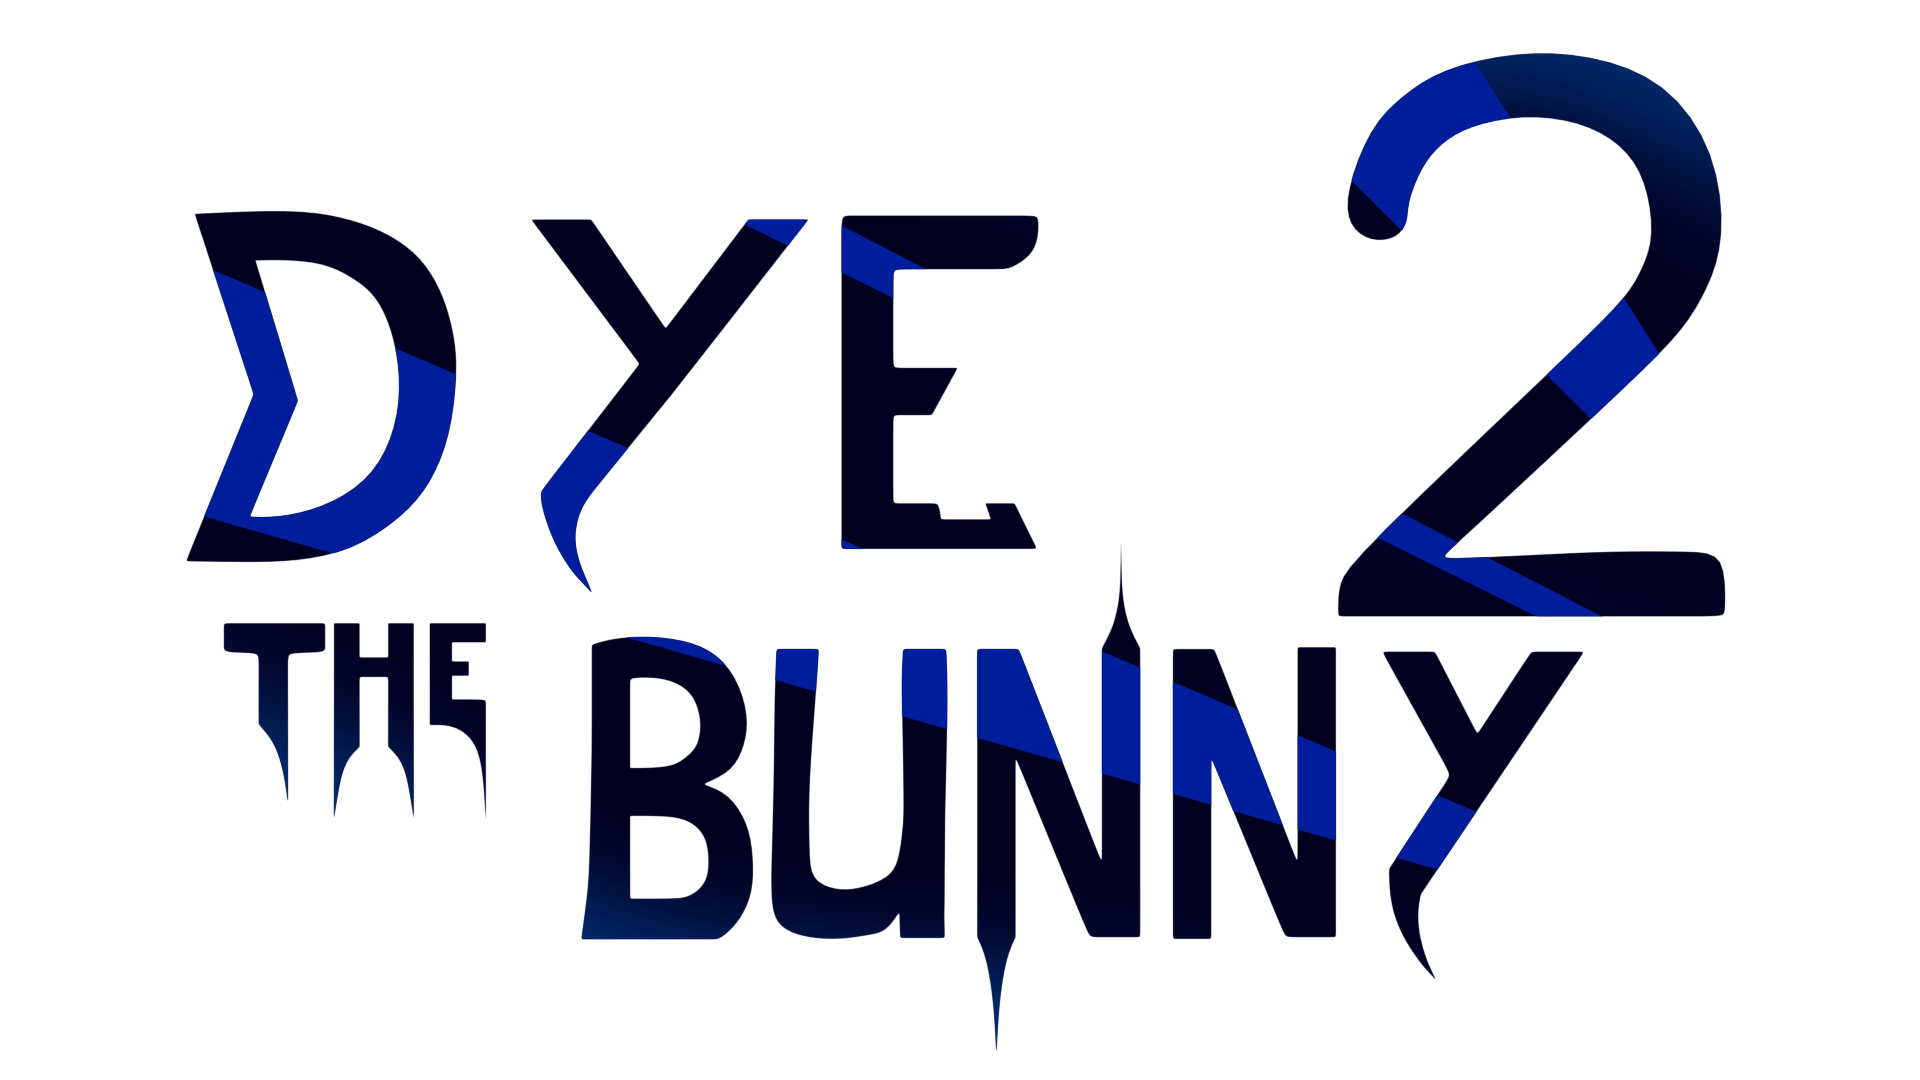 Dye The Bunny 2